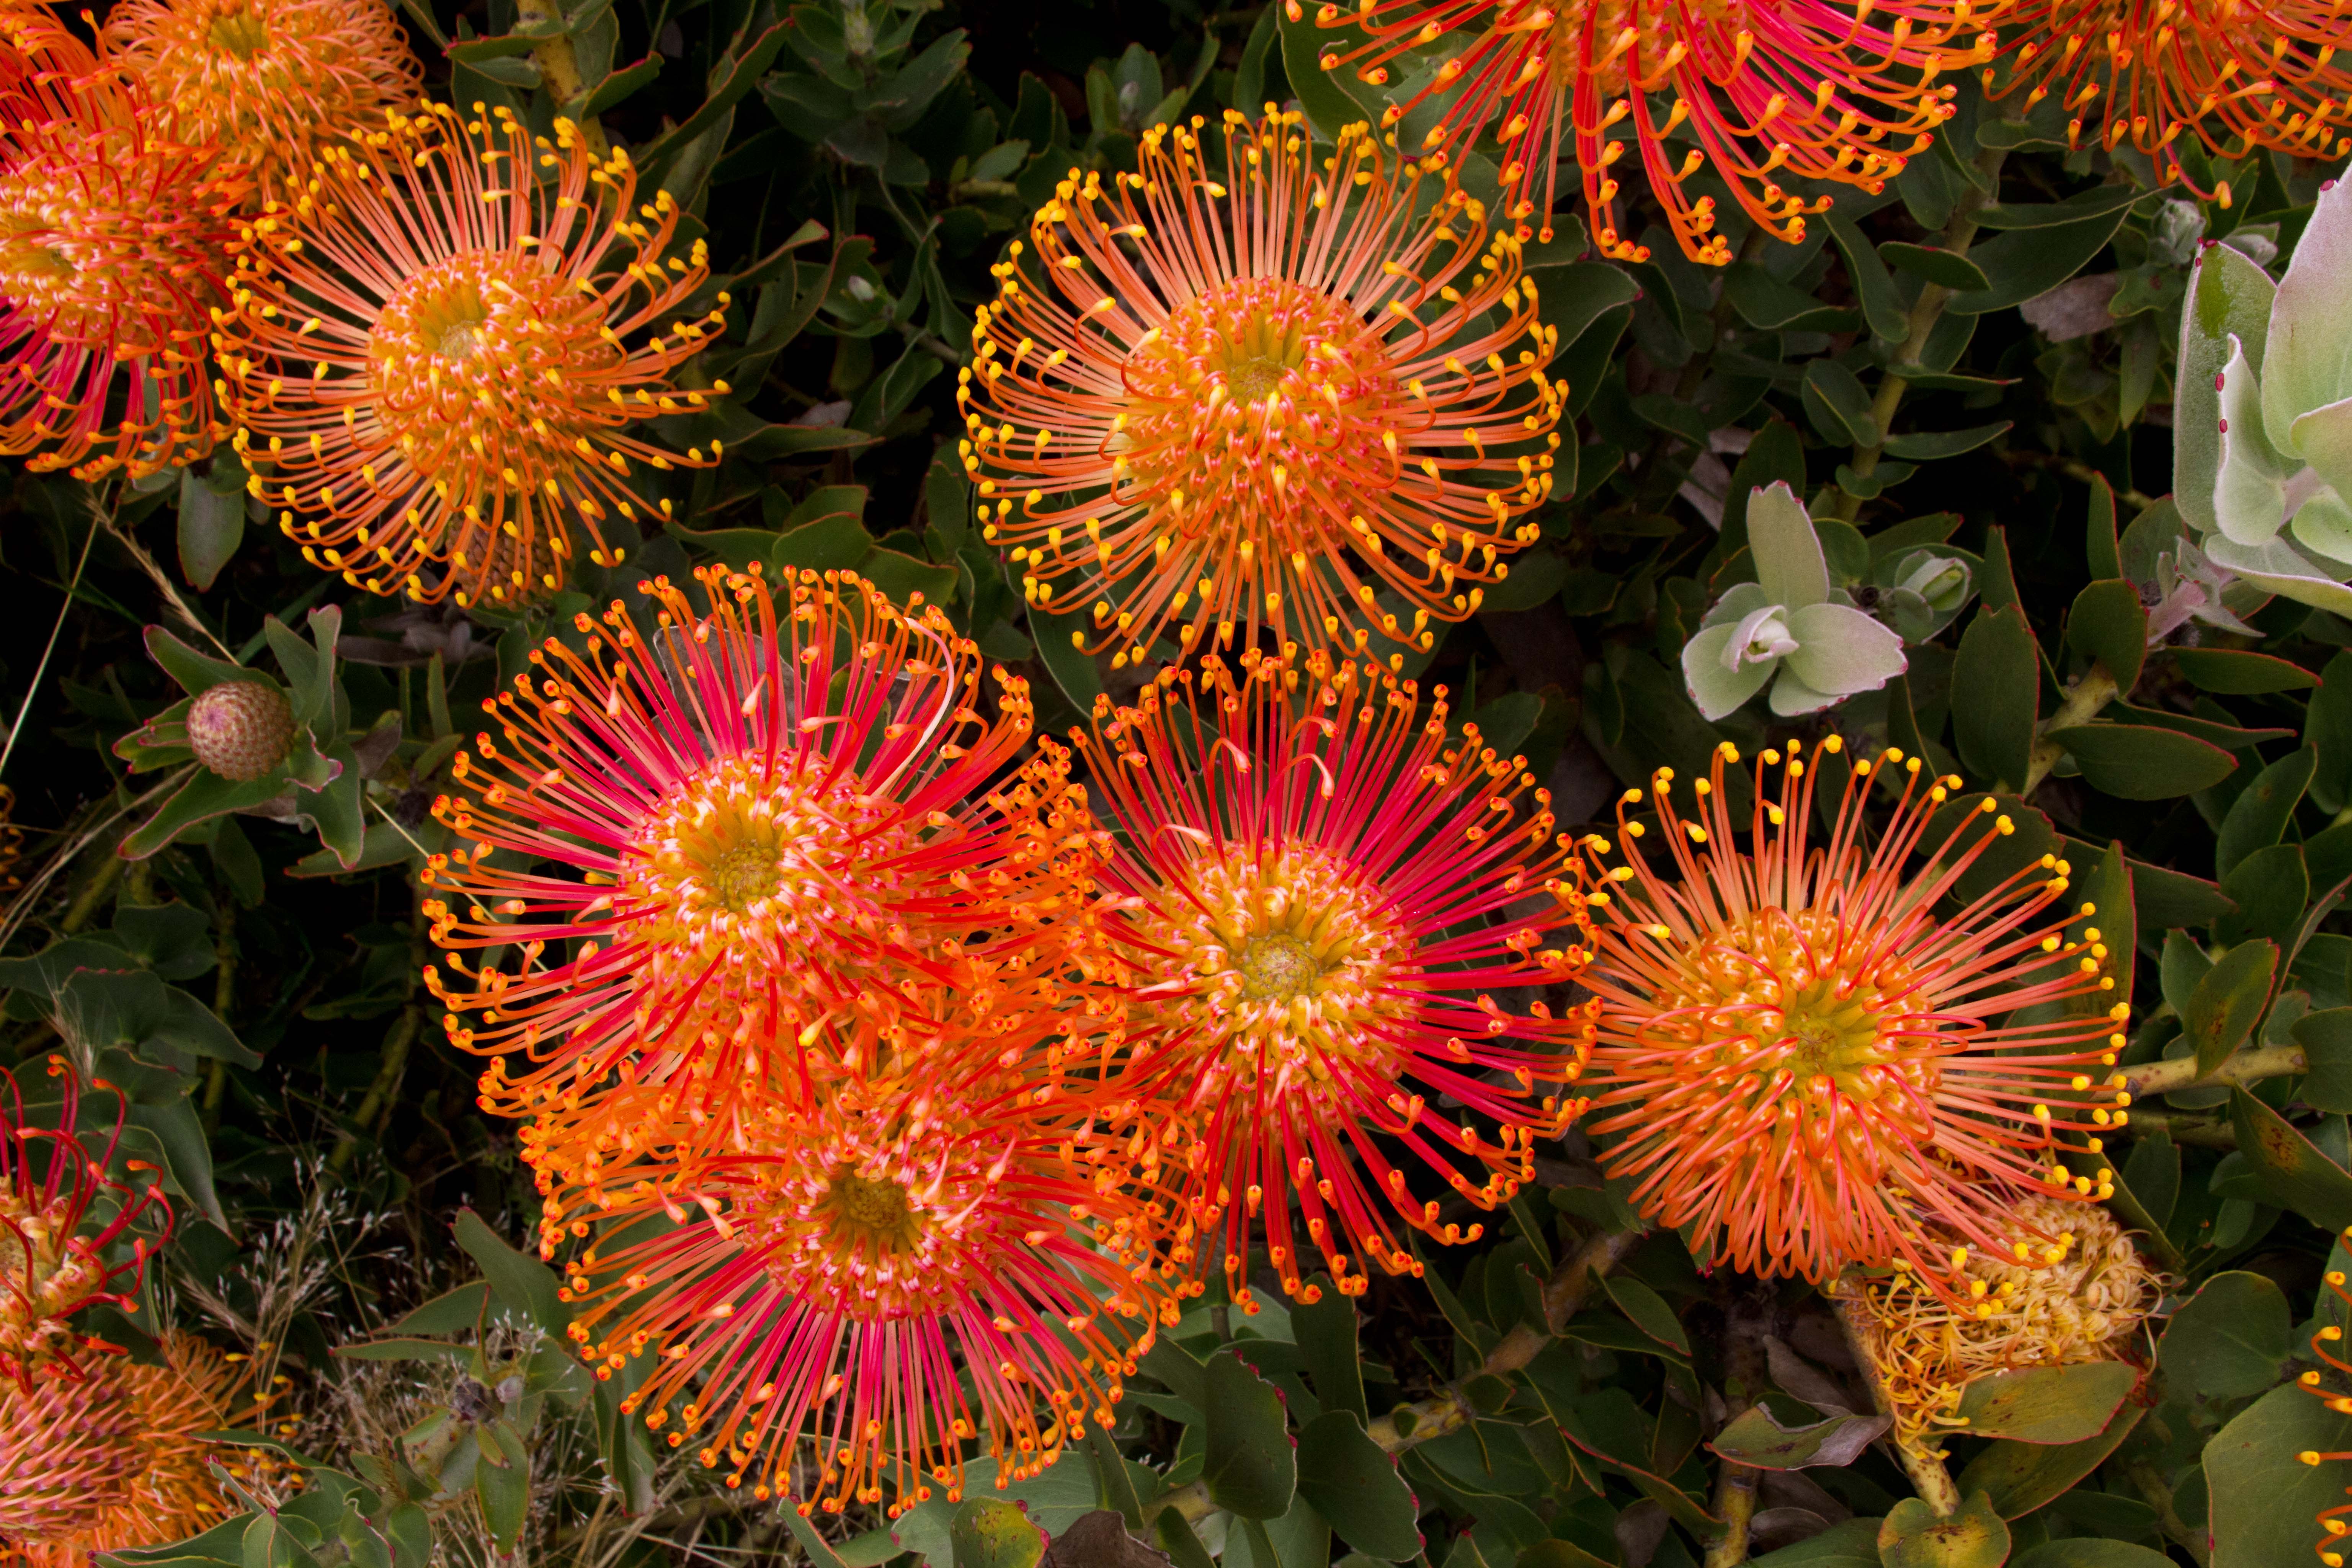 1pincushion-protea-leucospermum-cordifolium-perrys-orange-south-african-garden.jpg